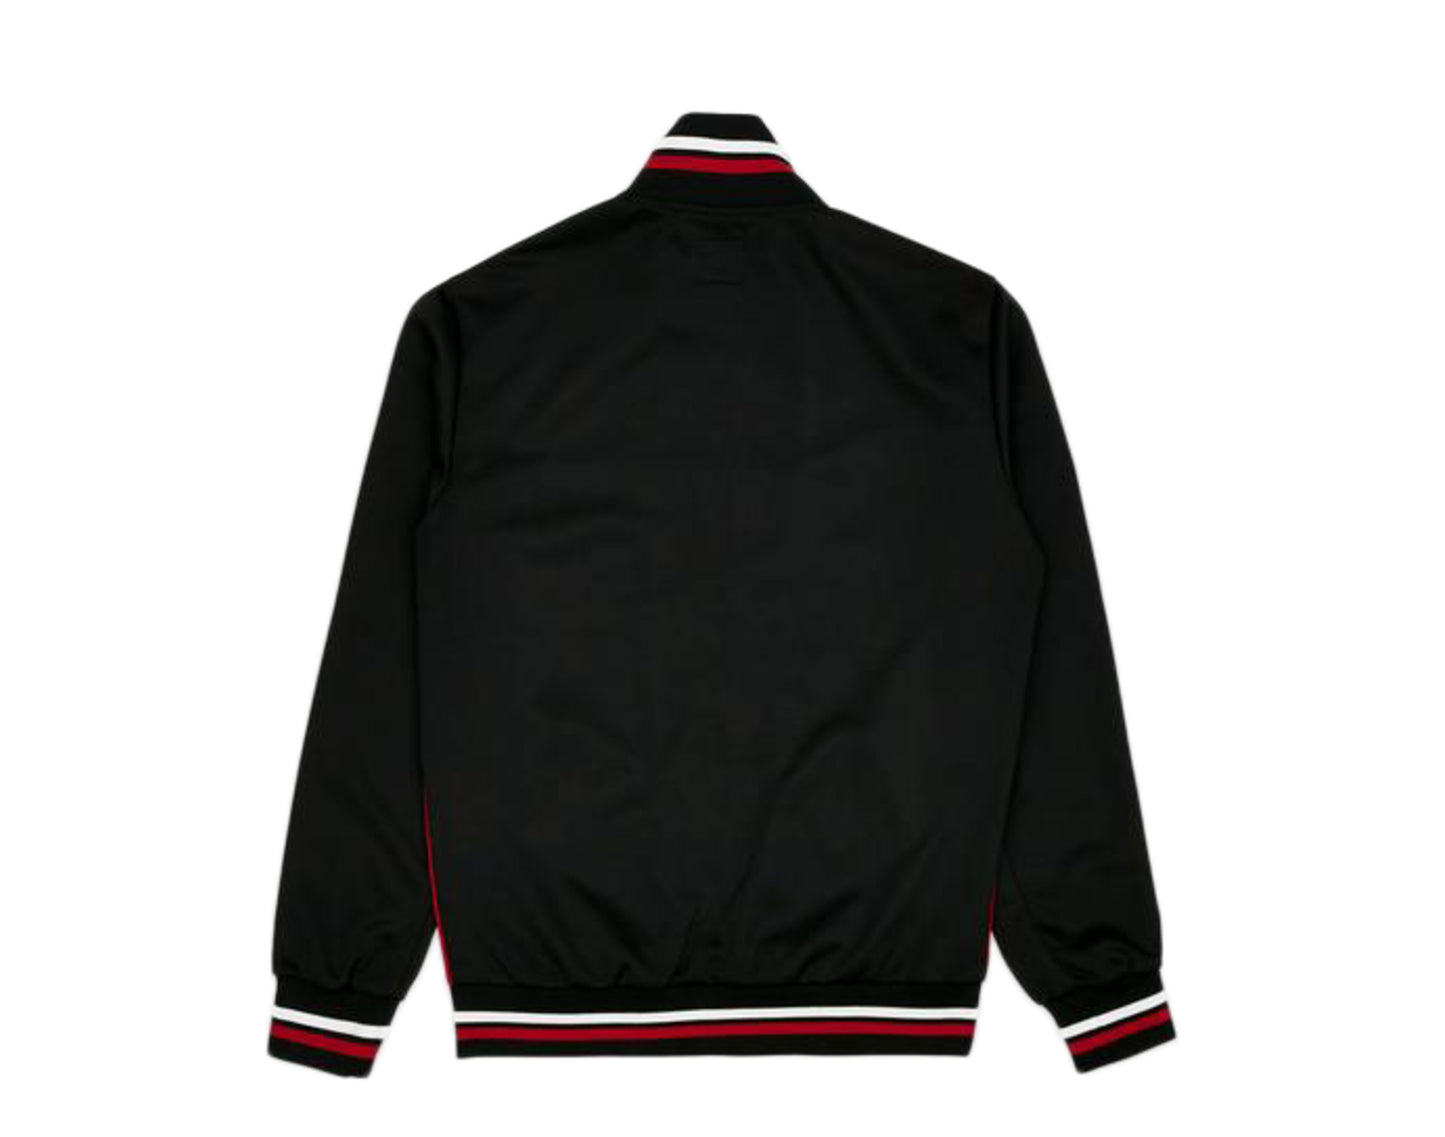 Le Tigre Tri-Color Tracktop Black/Red/White Men's Jacket LT042-BLK